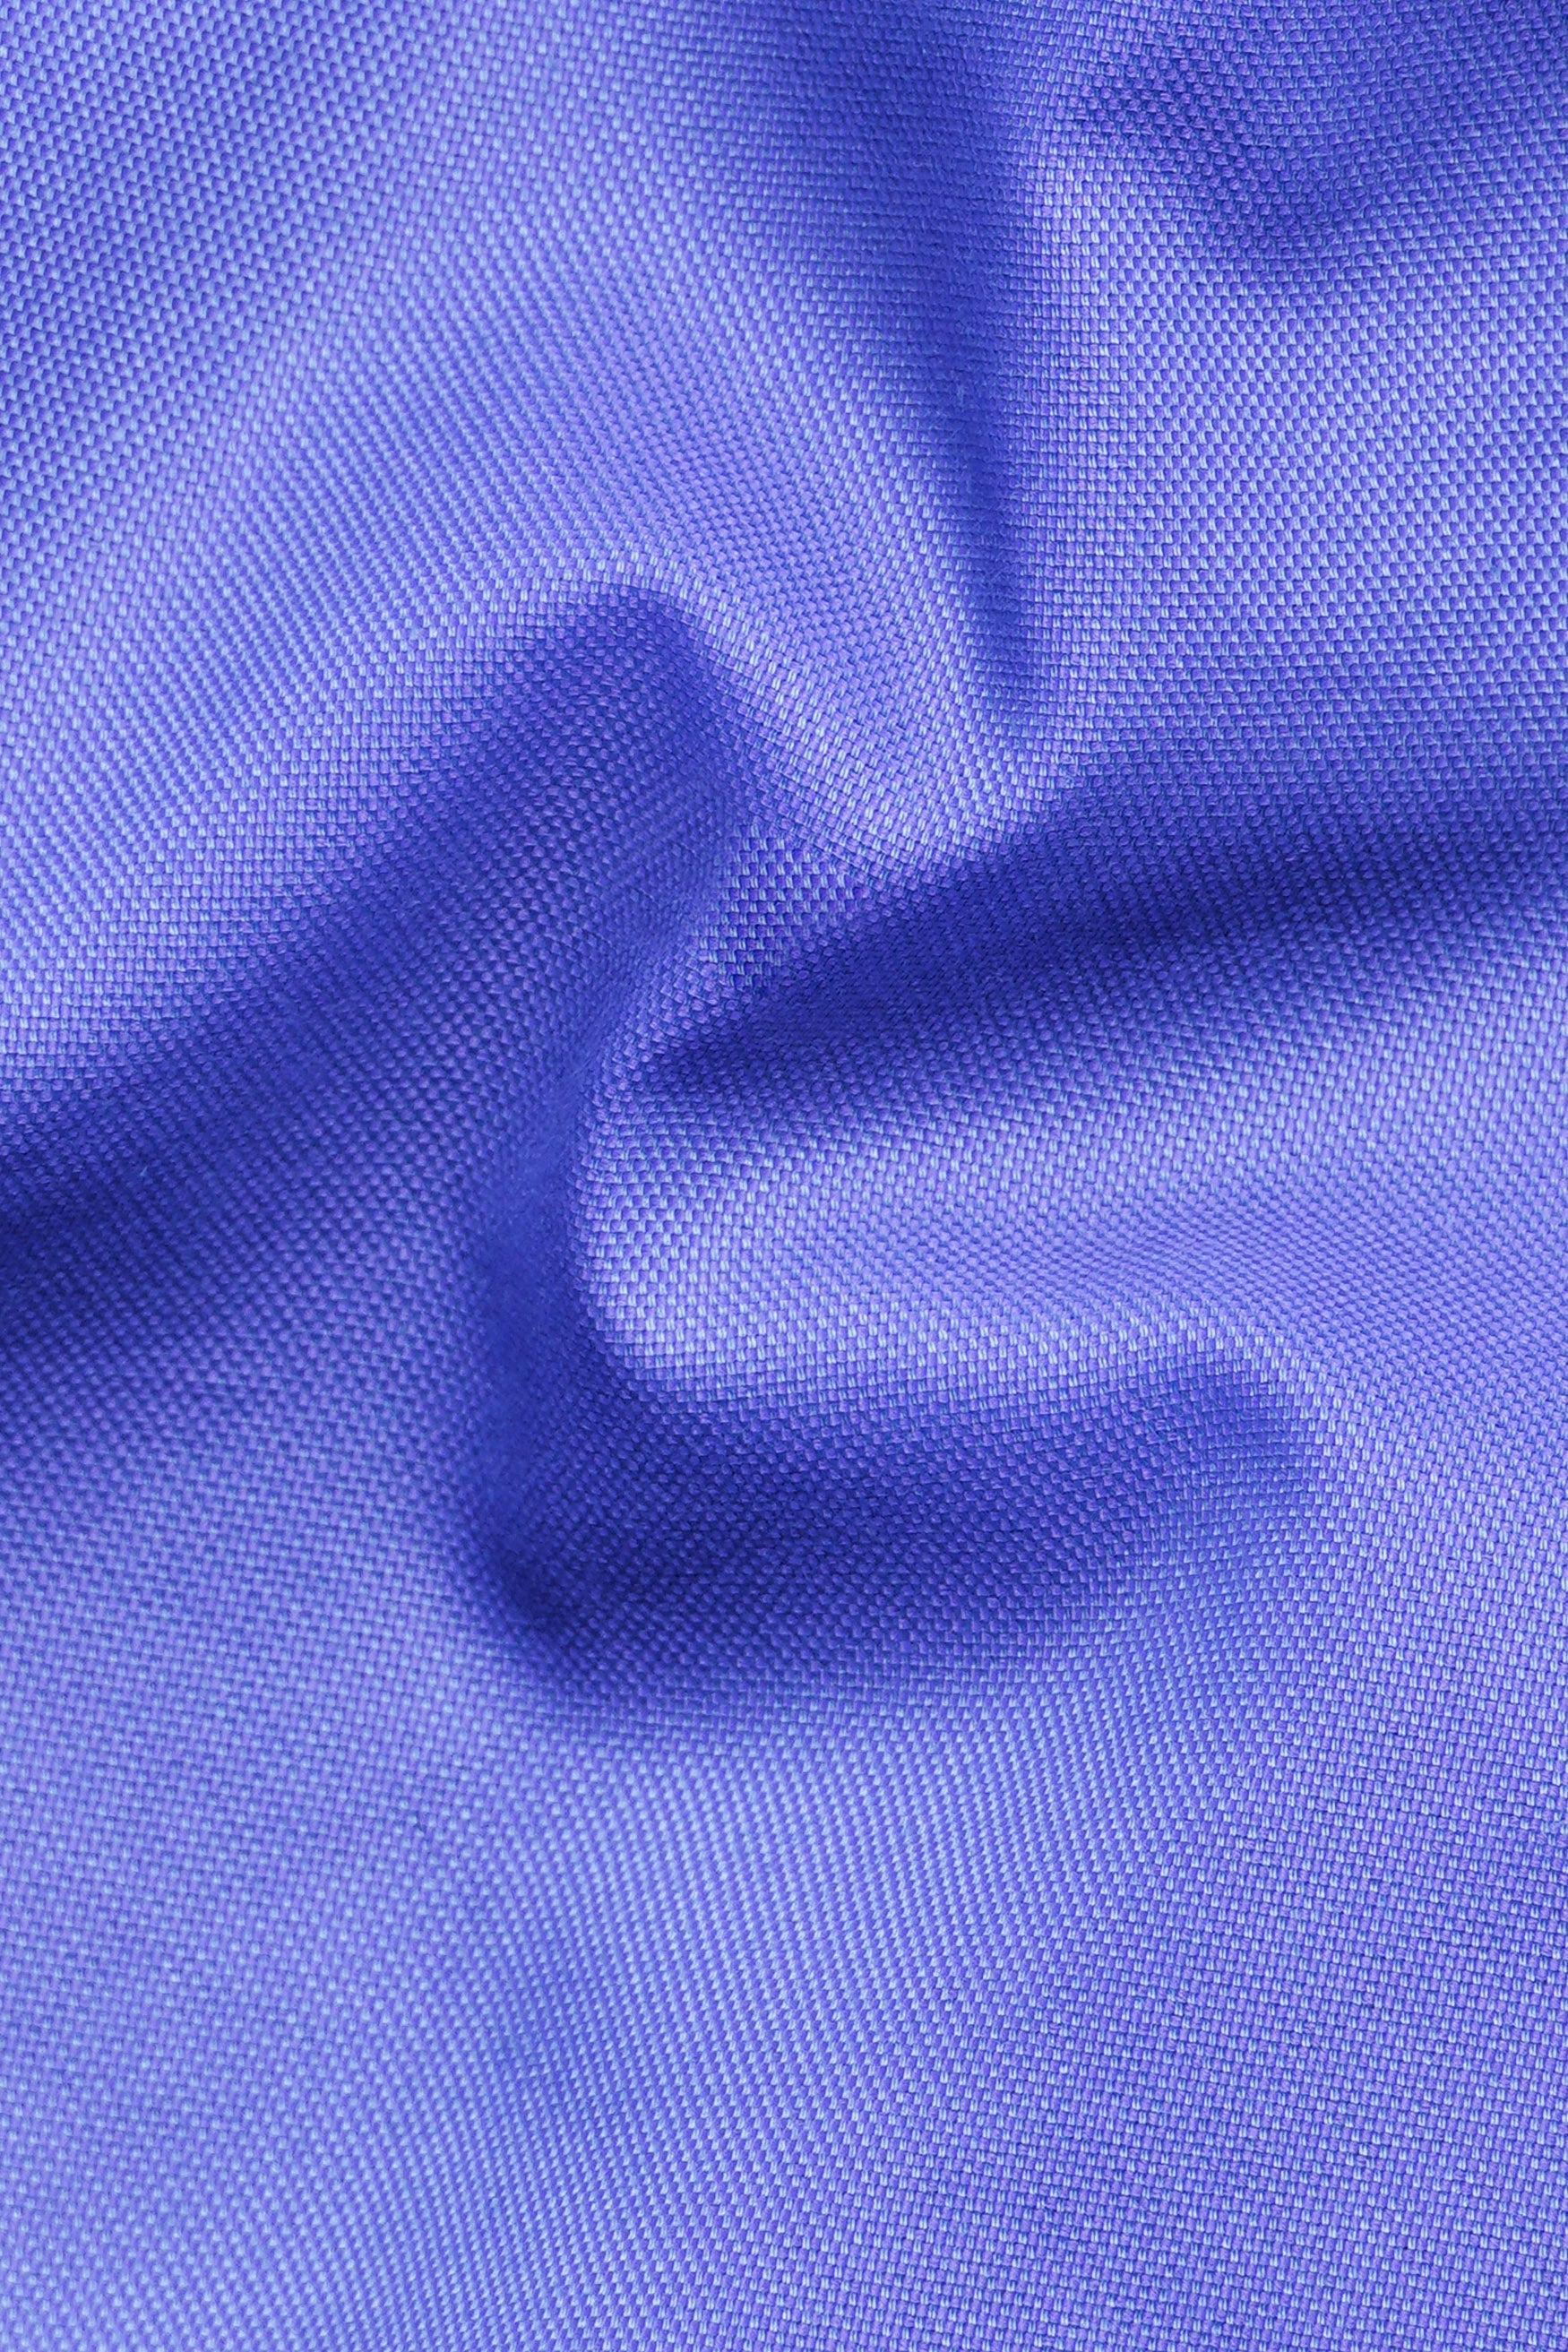 Chetwode Blue Royal Oxford Shirt